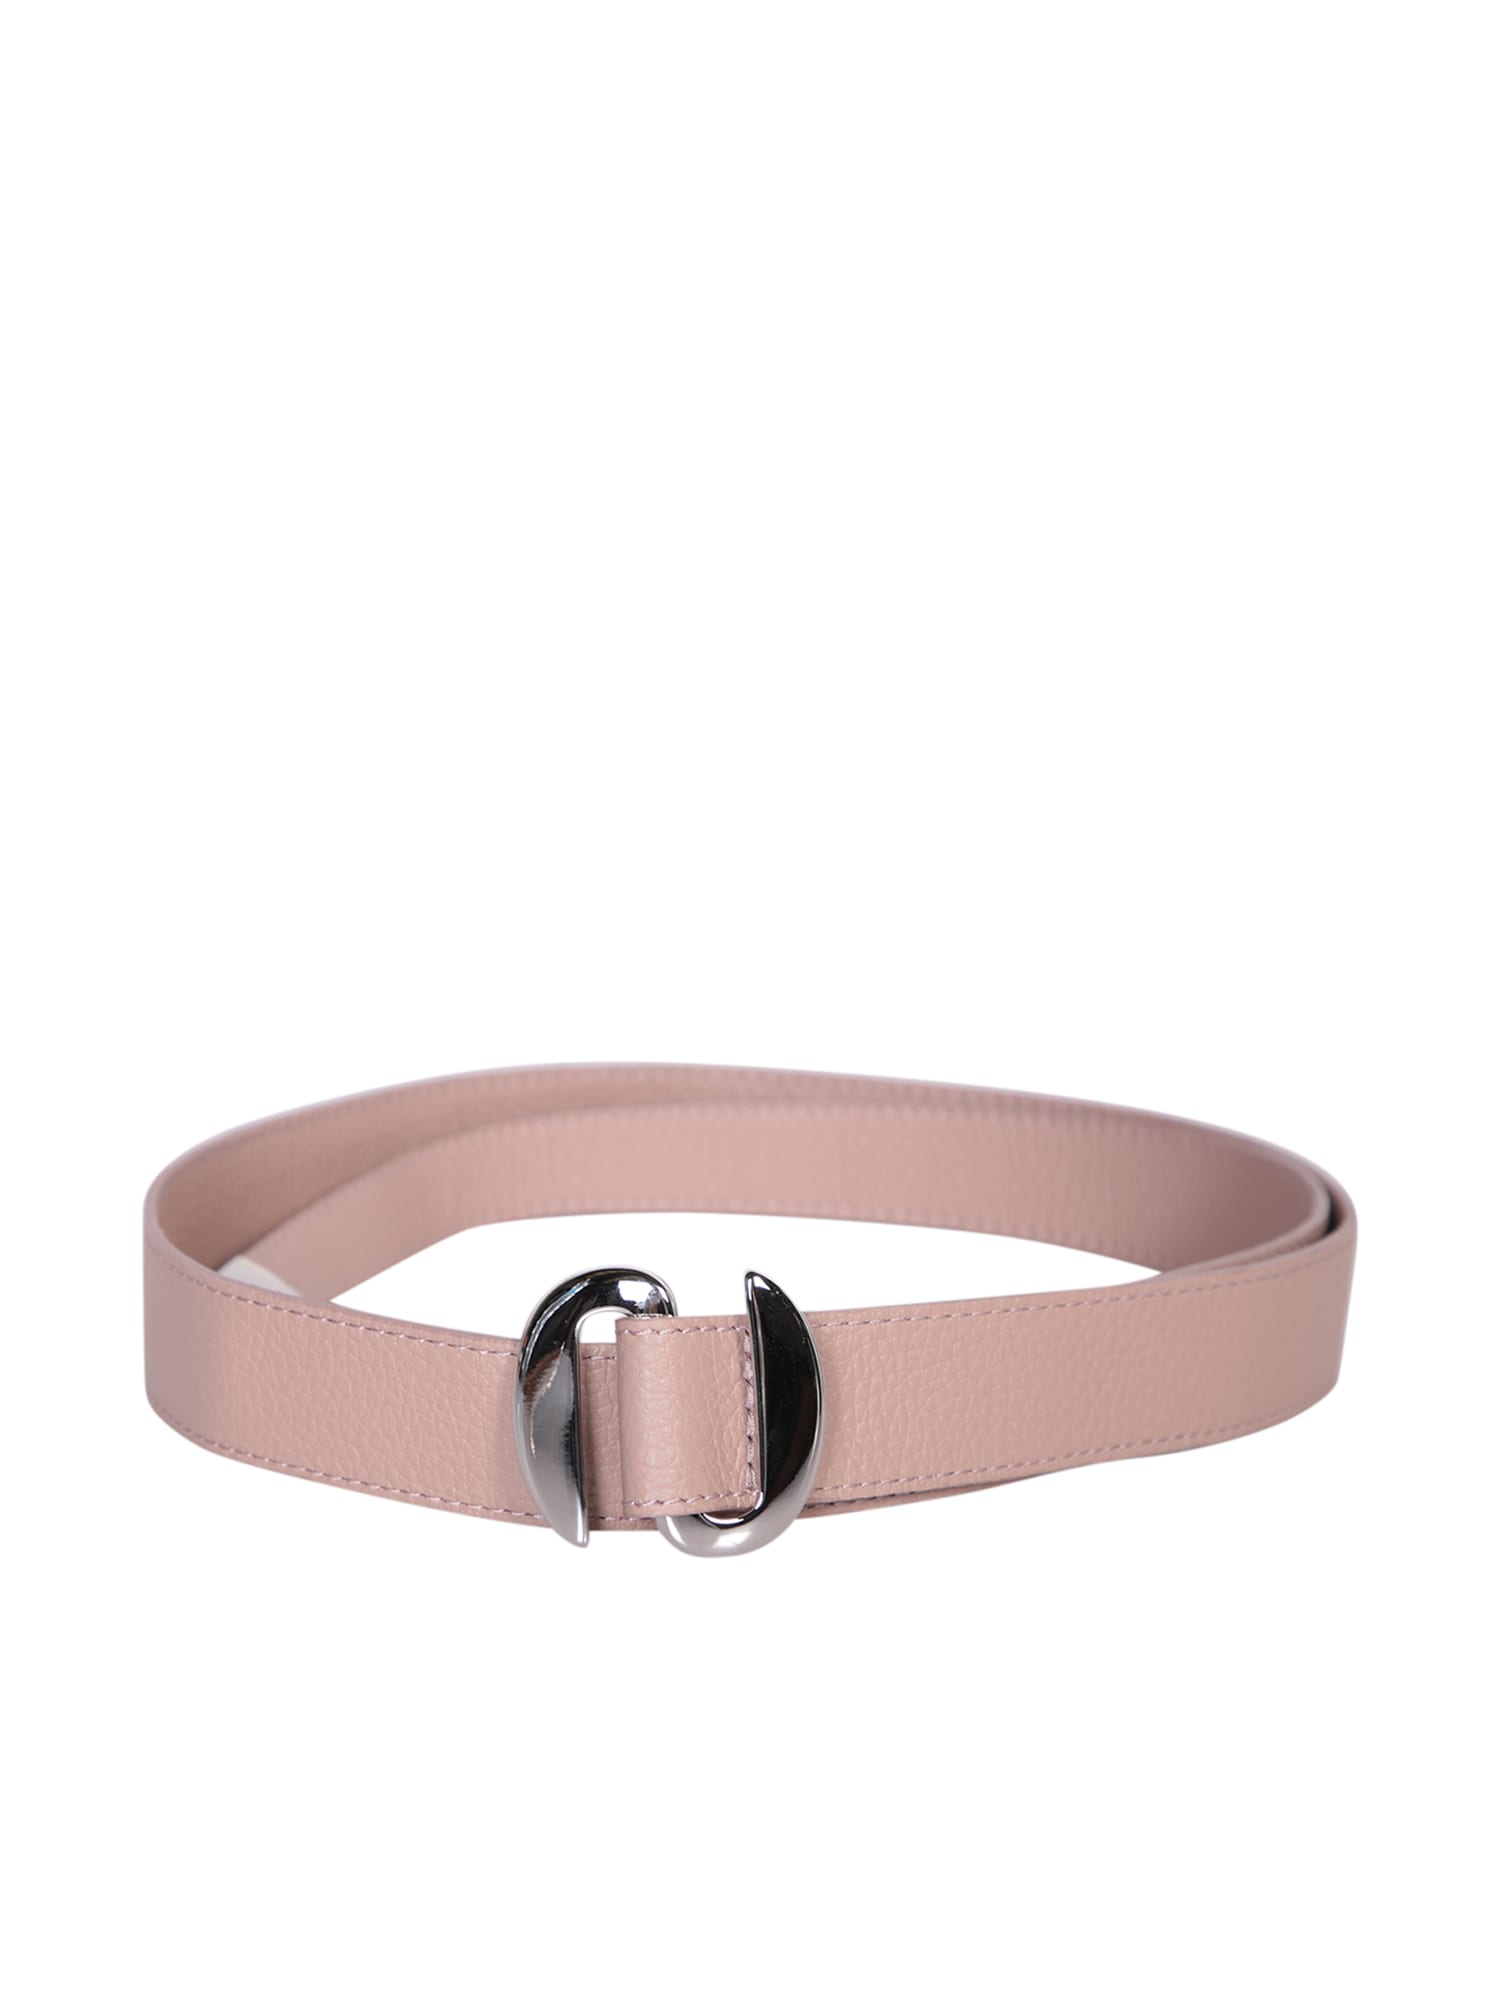 Shop Orciani Sense Antique Pink Belt